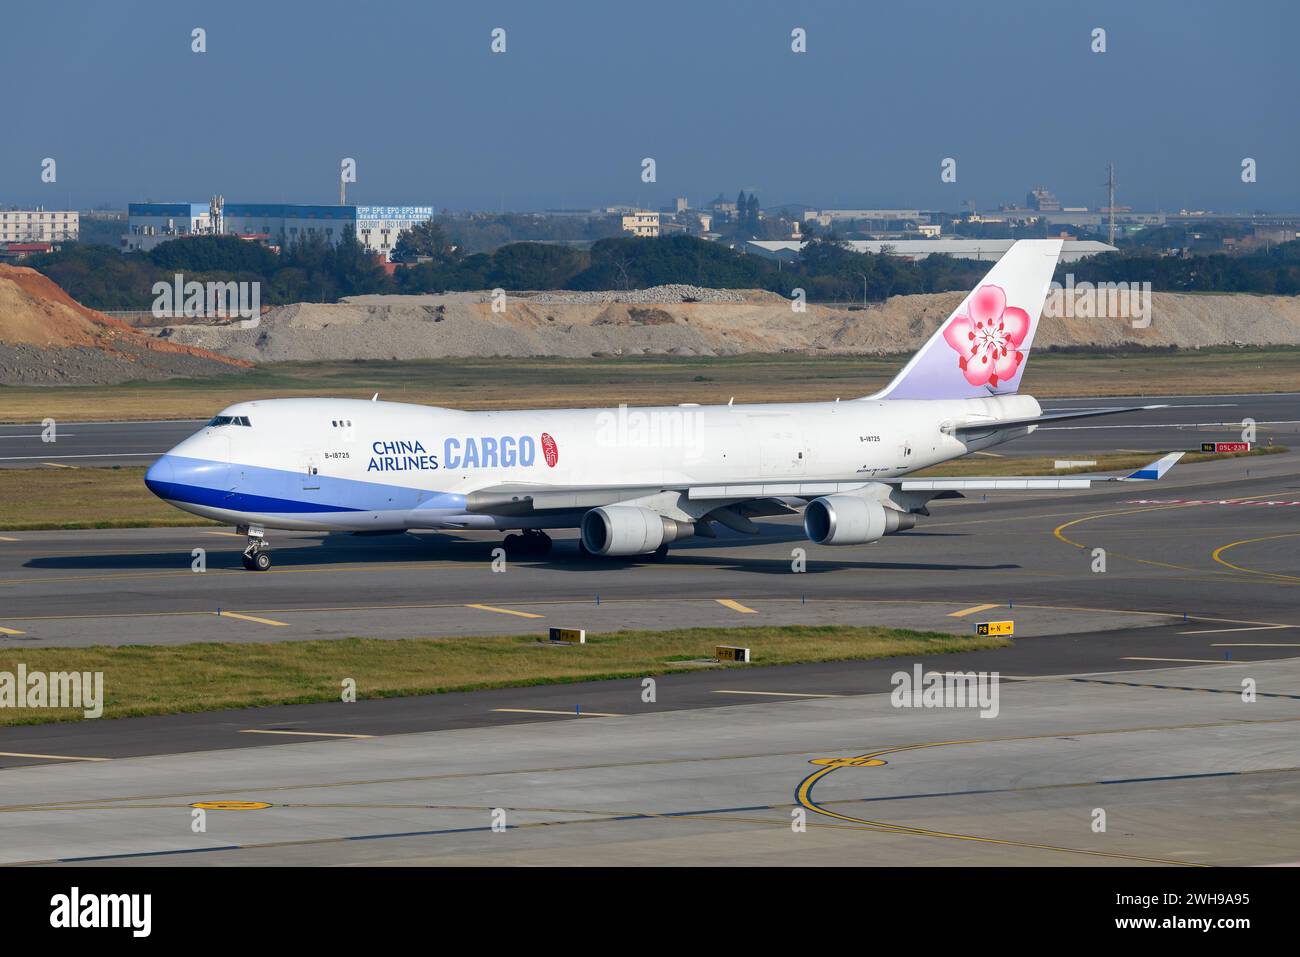 China Airlines Boeing 747 au sol. Avion 747-400F de China Airlines. Avion 747F. Banque D'Images